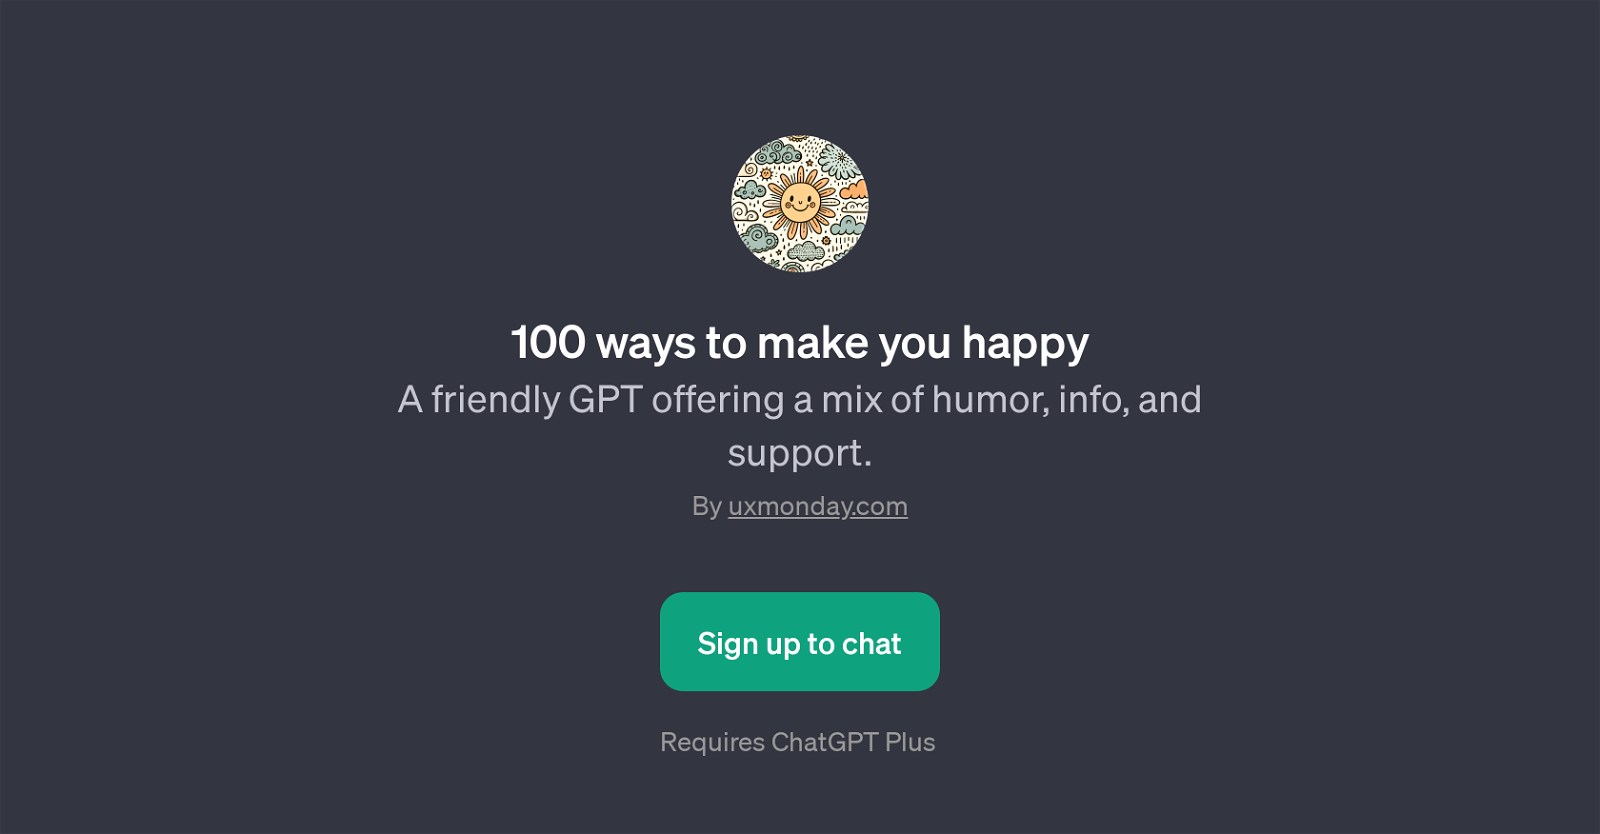 100 ways to make you happy website